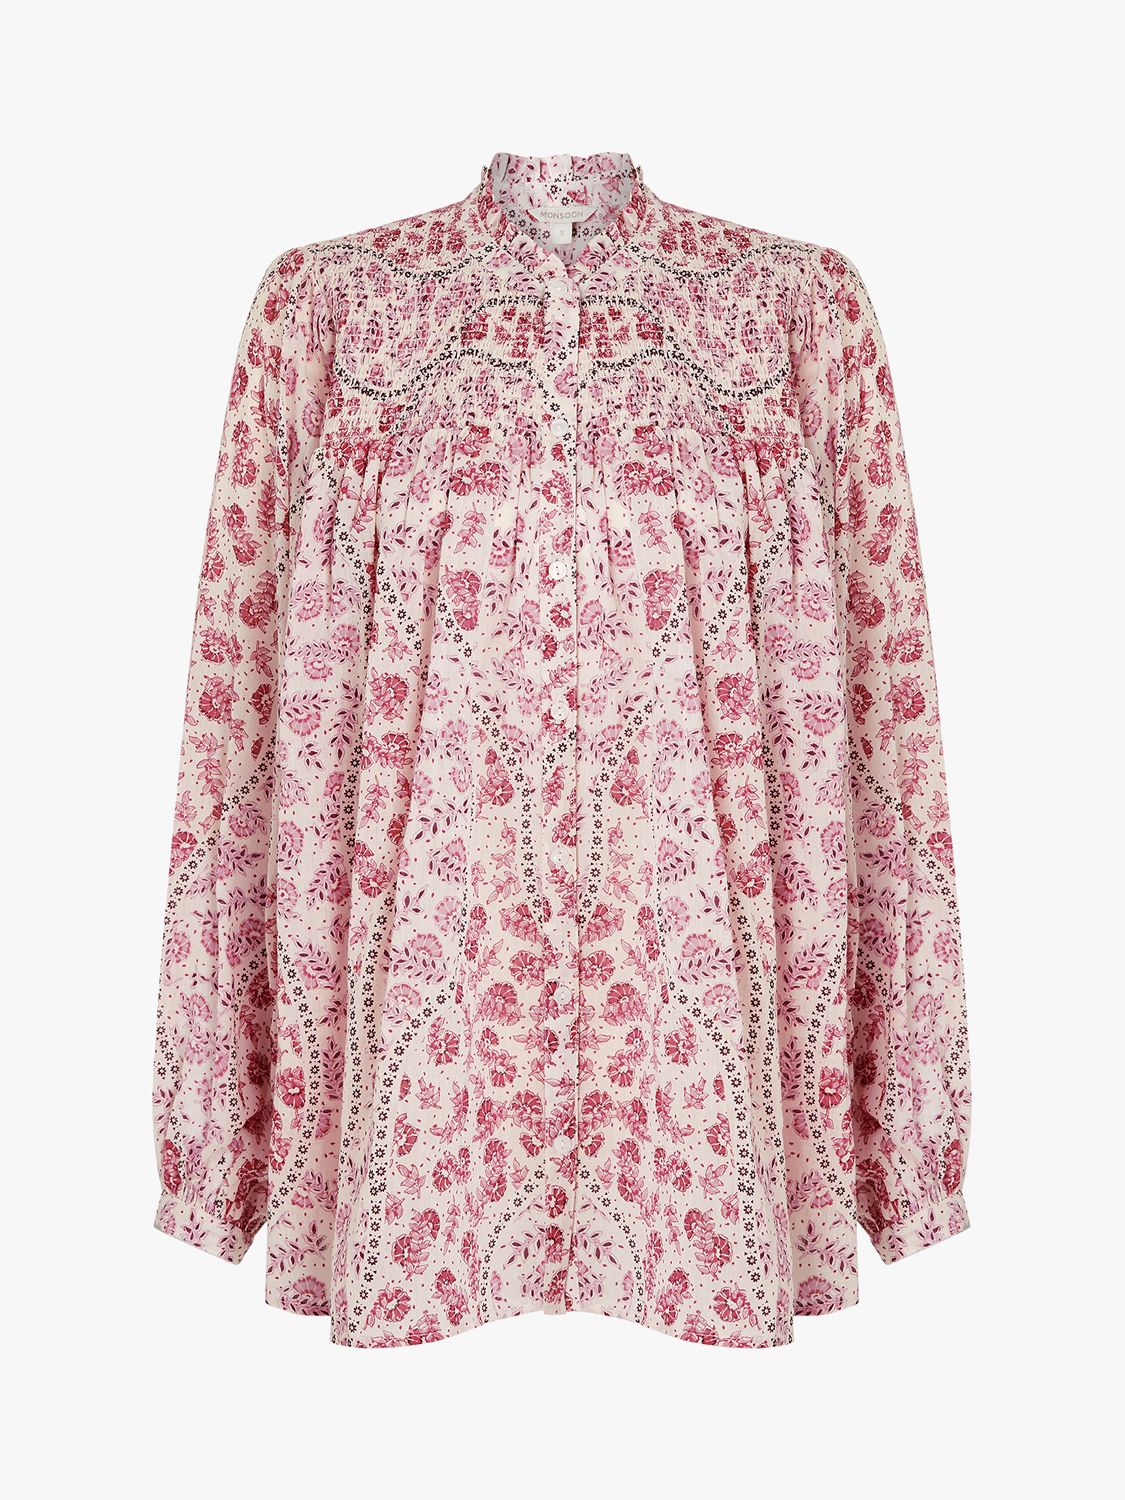 Monsoon Long Sleeve Floral Print Top, Ivory/Pink at John Lewis & Partners